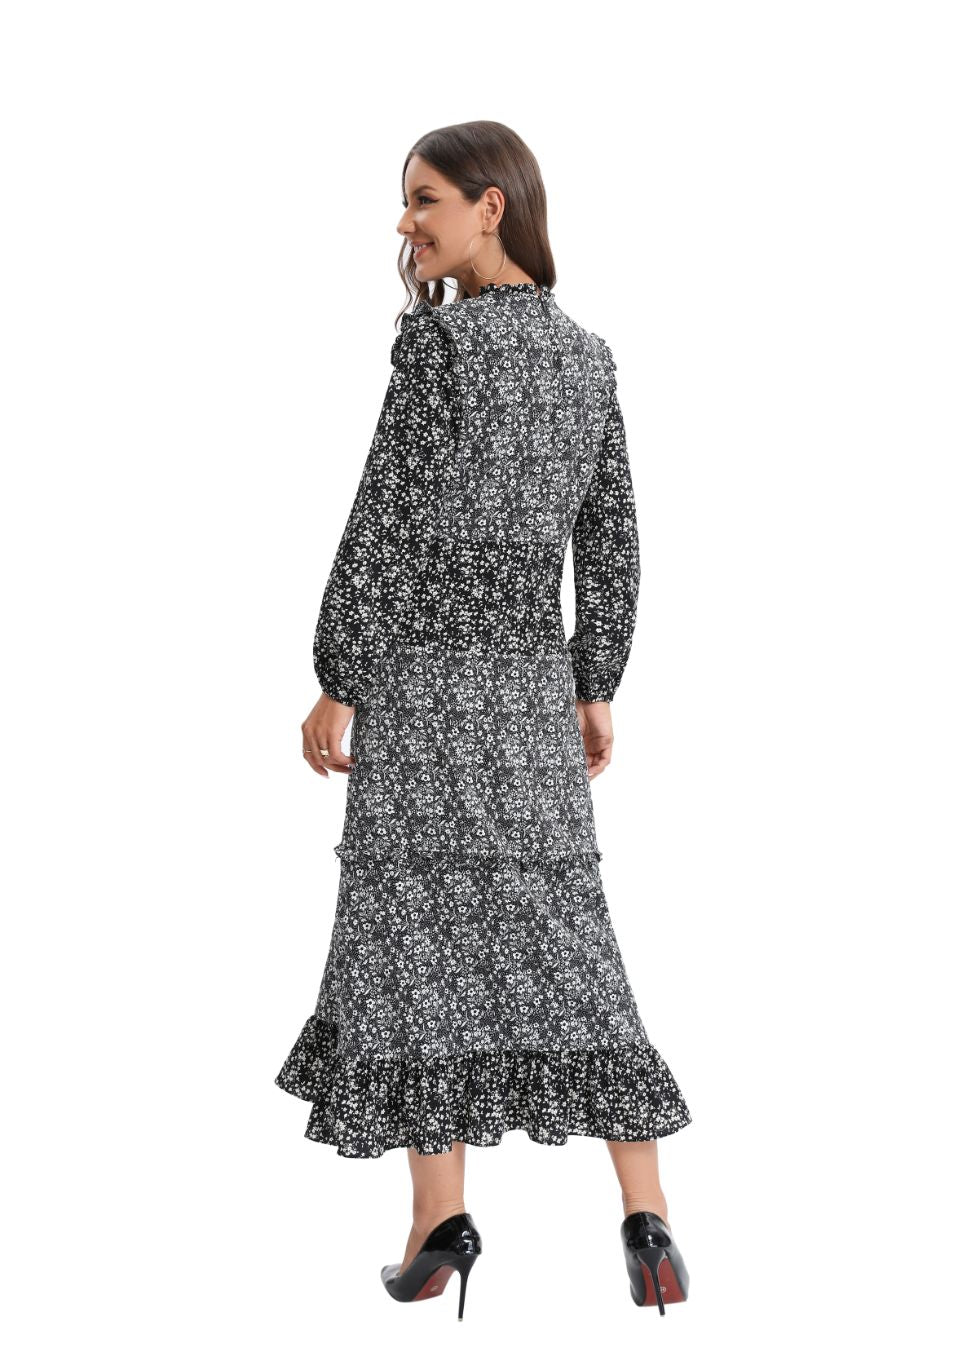 Long Sleeve Mixed Print Dress - alamaud